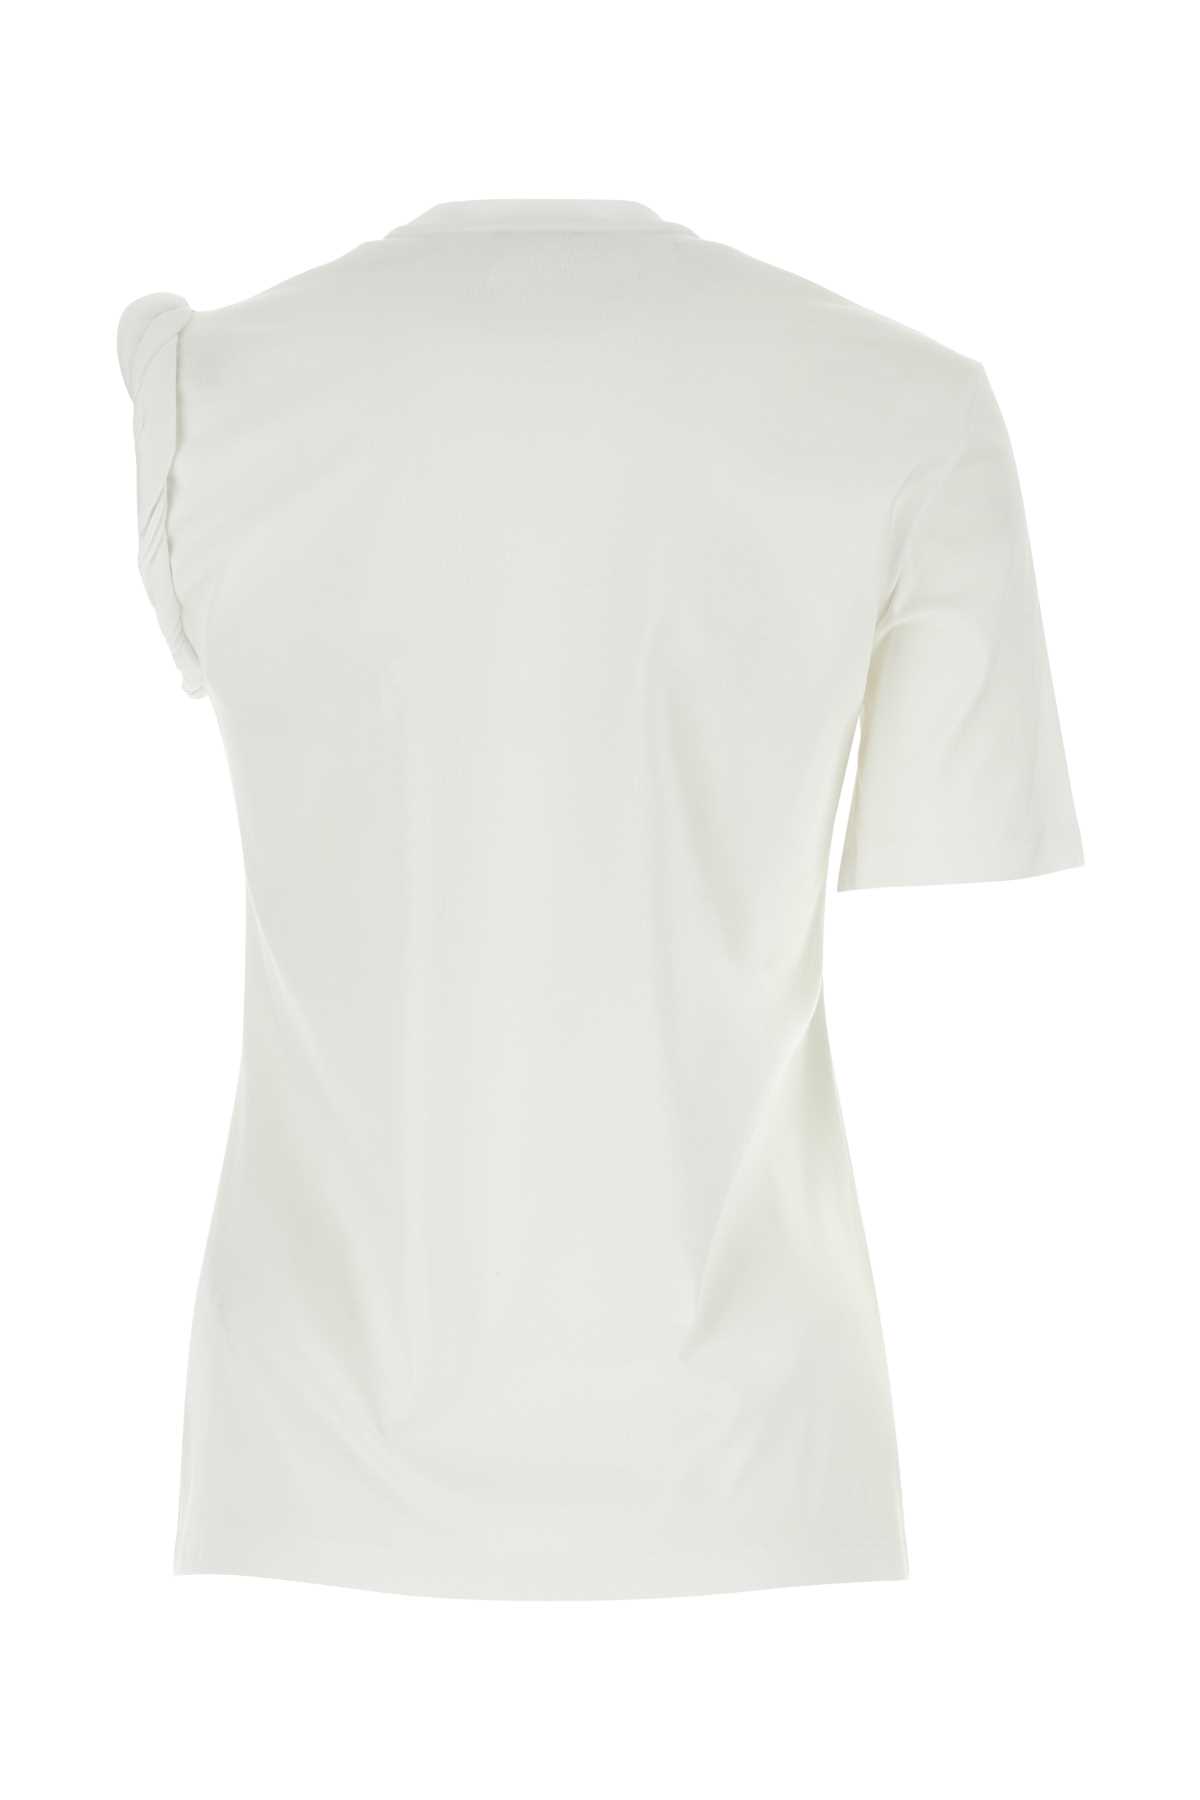 Versace White Cotton T-shirt In 1w000